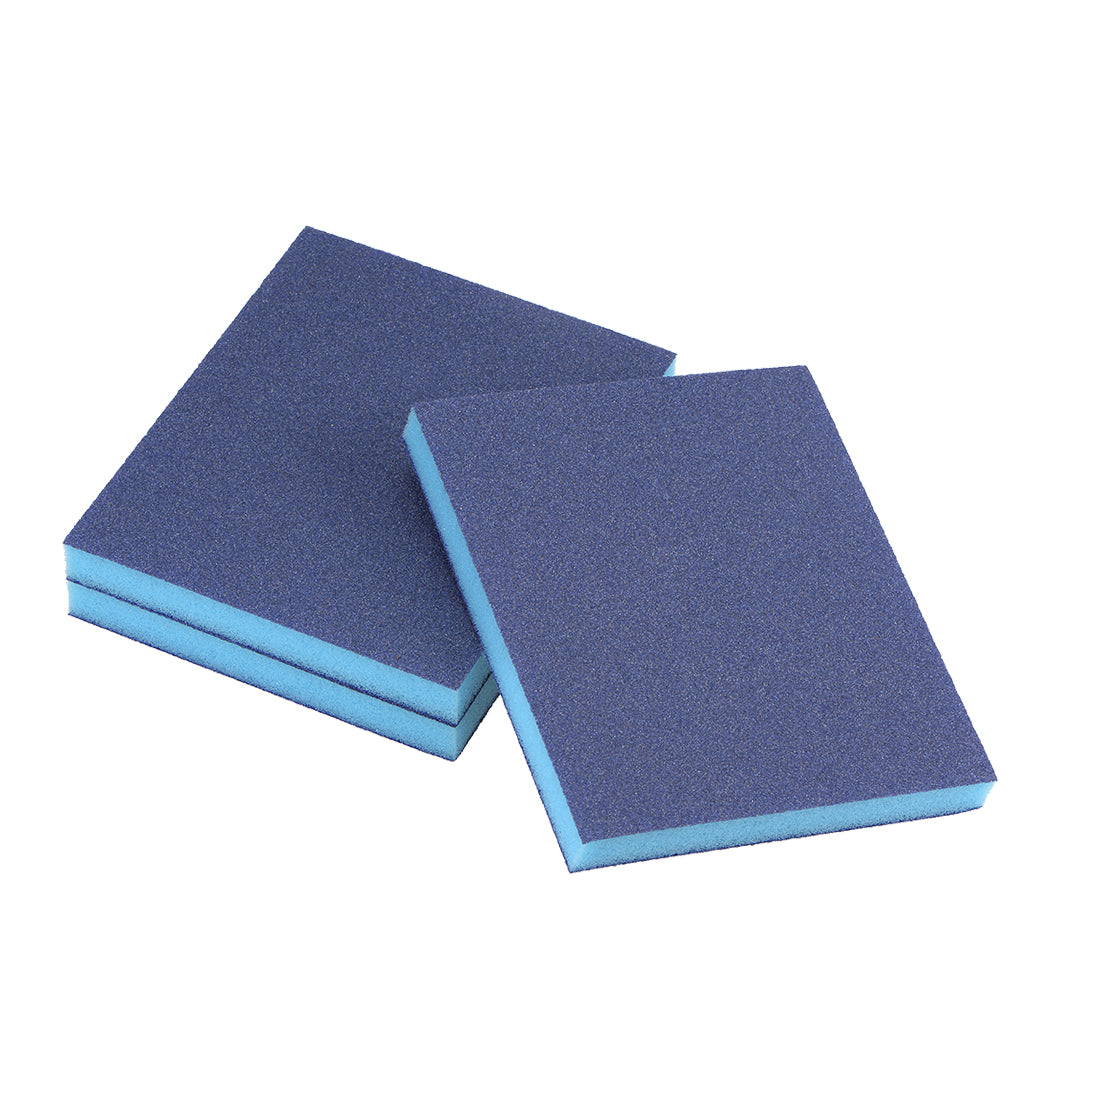 Uxcell Uxcell Sanding Sponge 220 Grit Sanding Block Pad 4.7inch x 3.9inch x 0.4inch Blue 3pcs